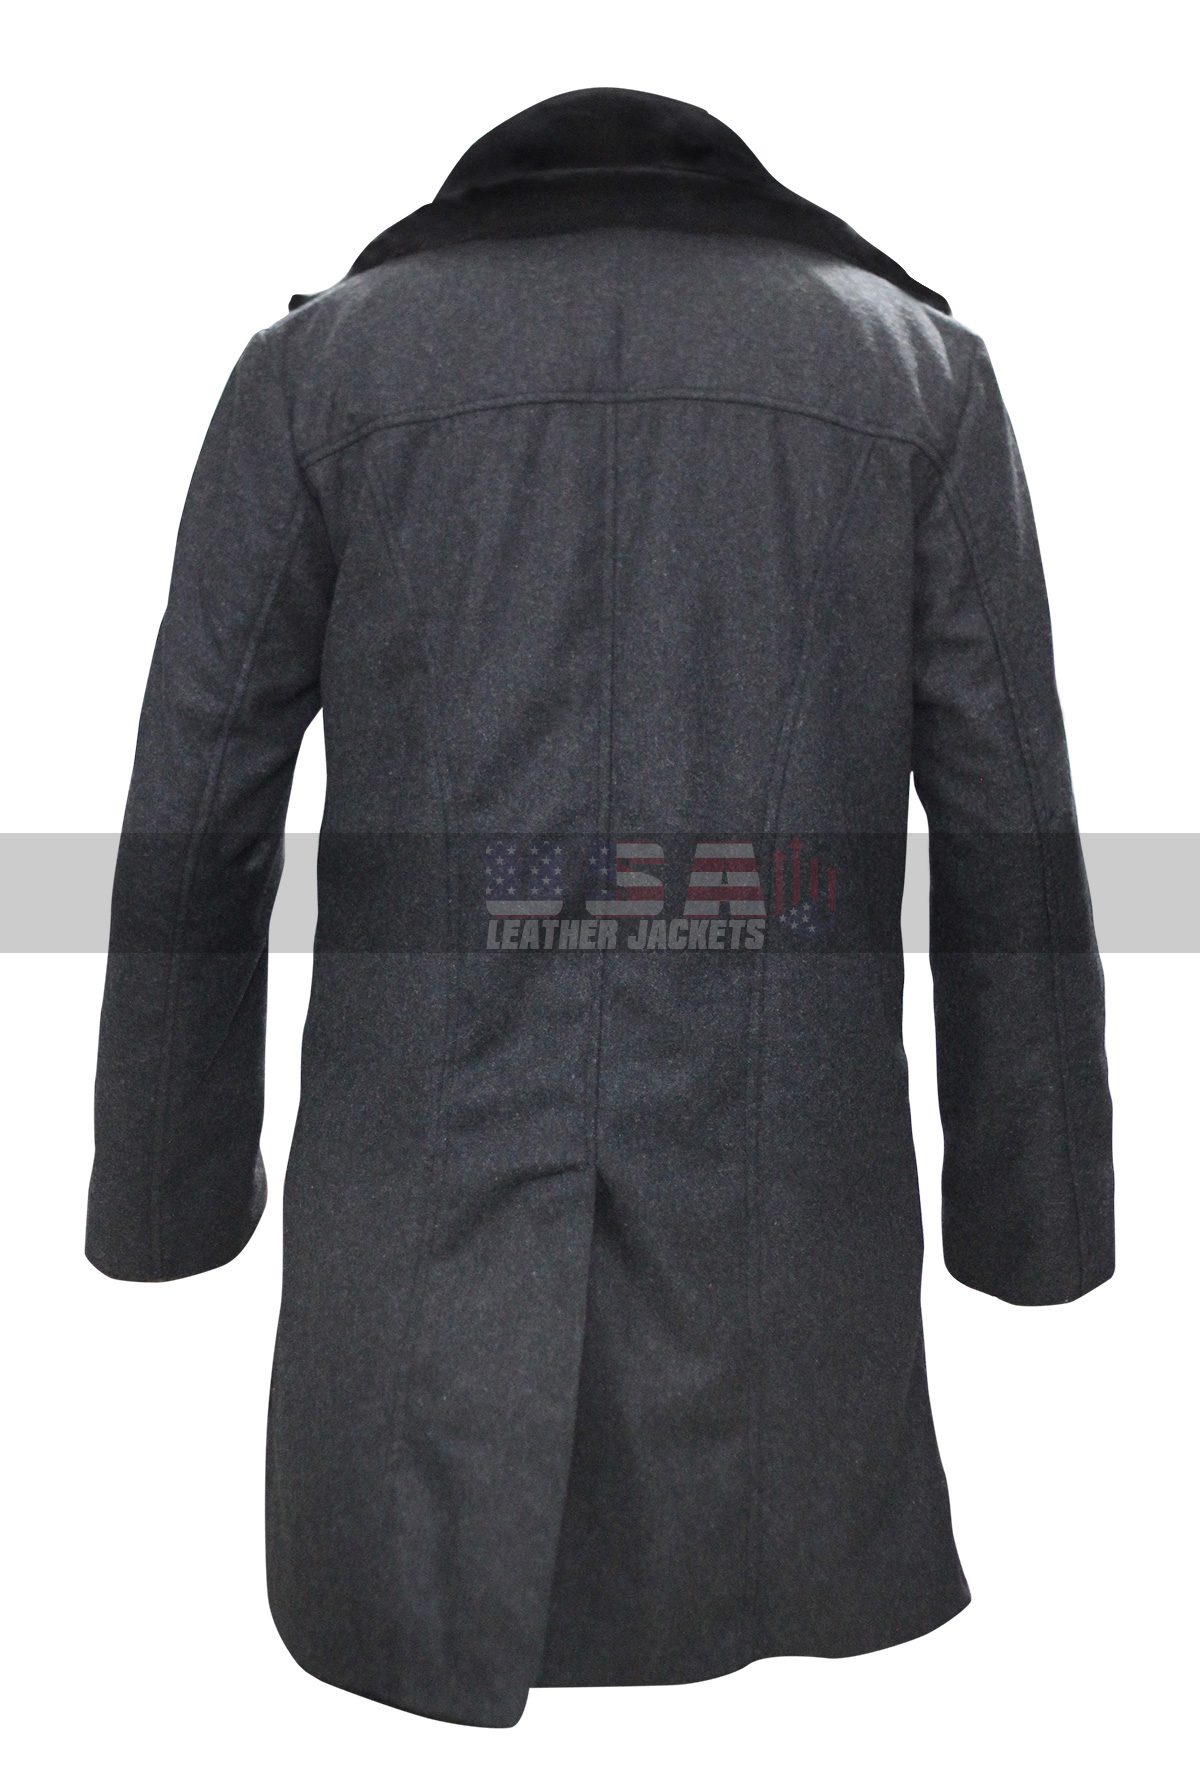 Fargo Billy Bob Thornton Black Fur Collar Wool Coat